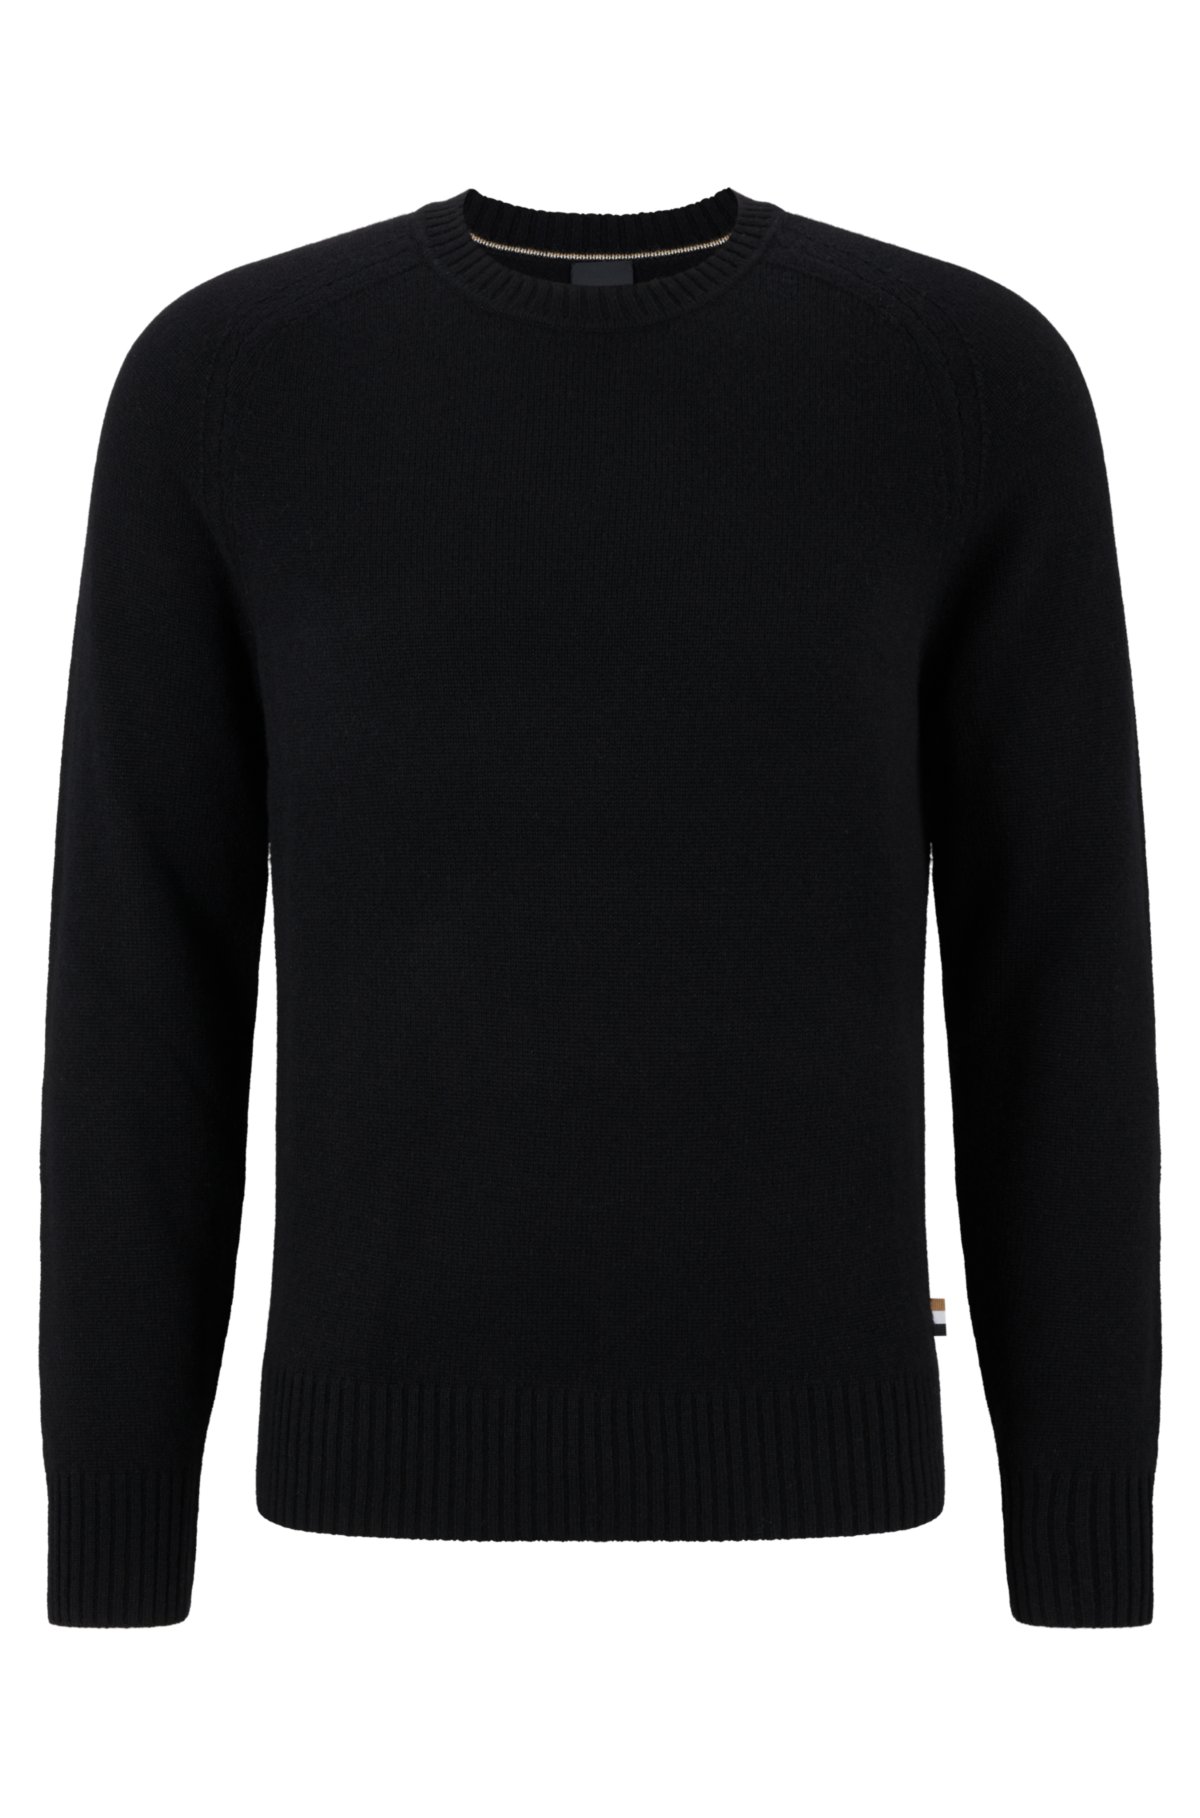 Louis Vuitton x NBA - Authenticated Knitwear & Sweatshirt - Wool Multicolour for Women, Never Worn